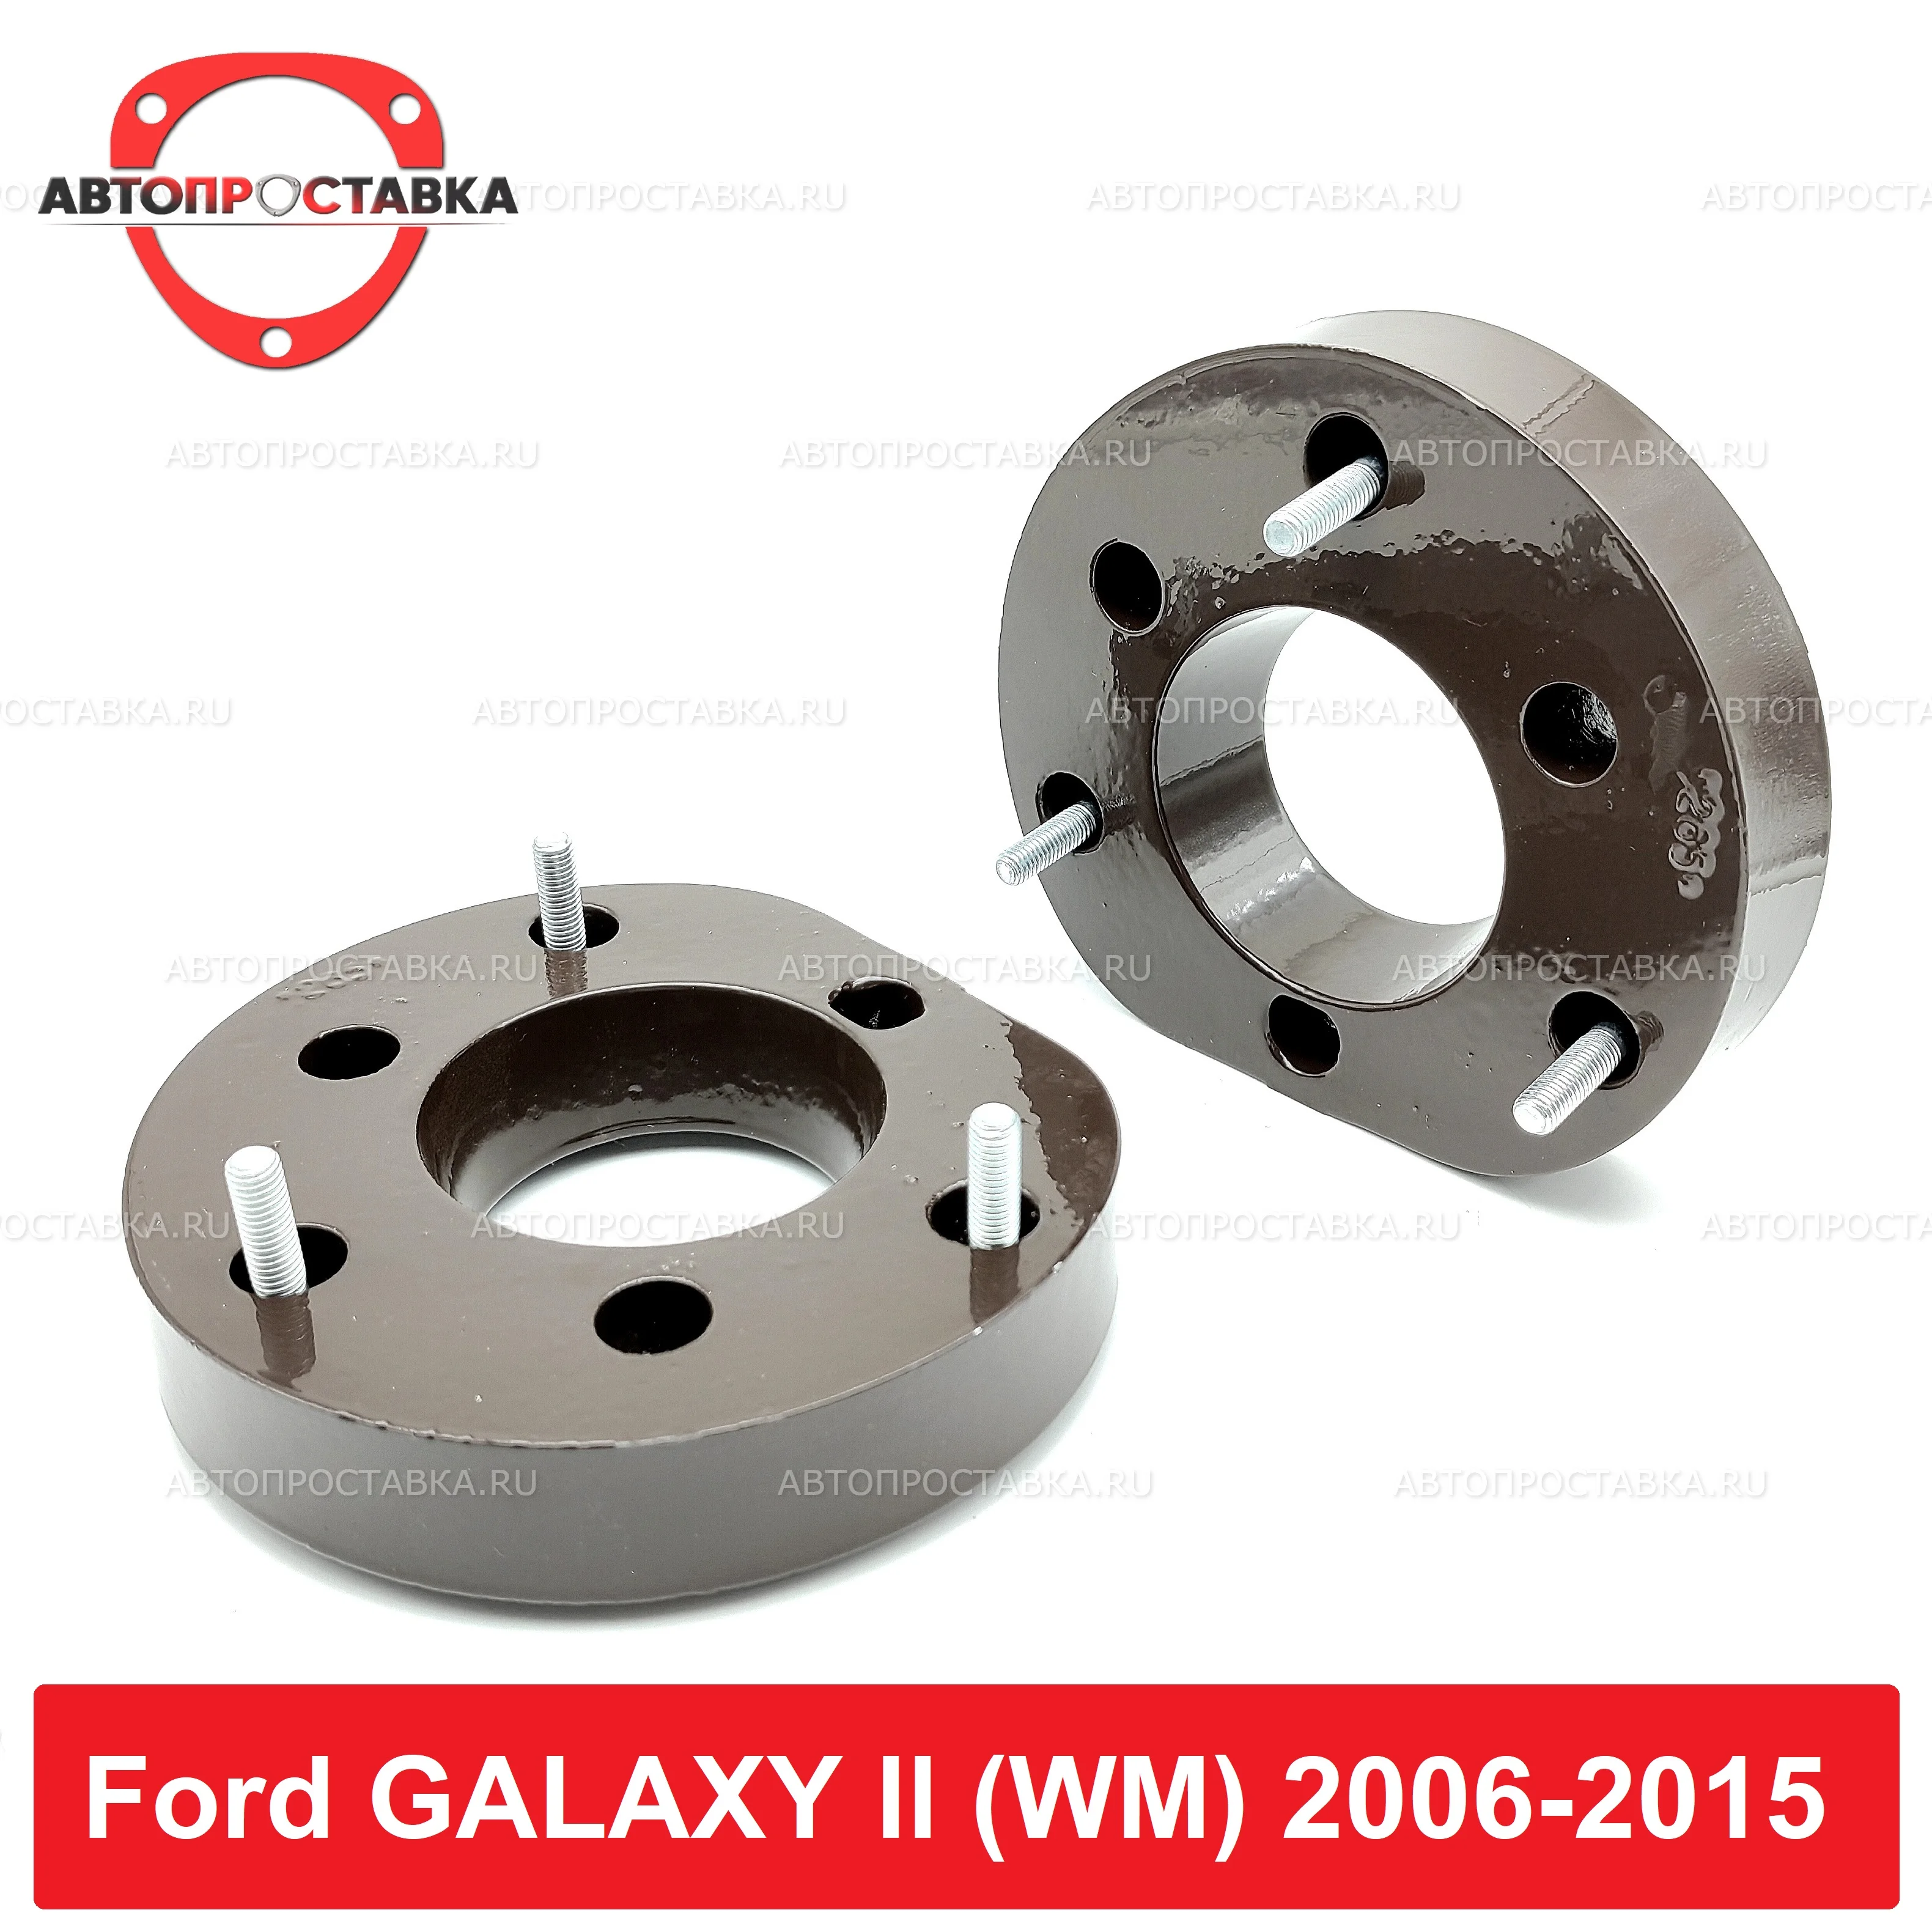 Передние проставки Ford GALAXY ll (WM) 2006-2015 для увеличения клиренса алюминий в комплекте